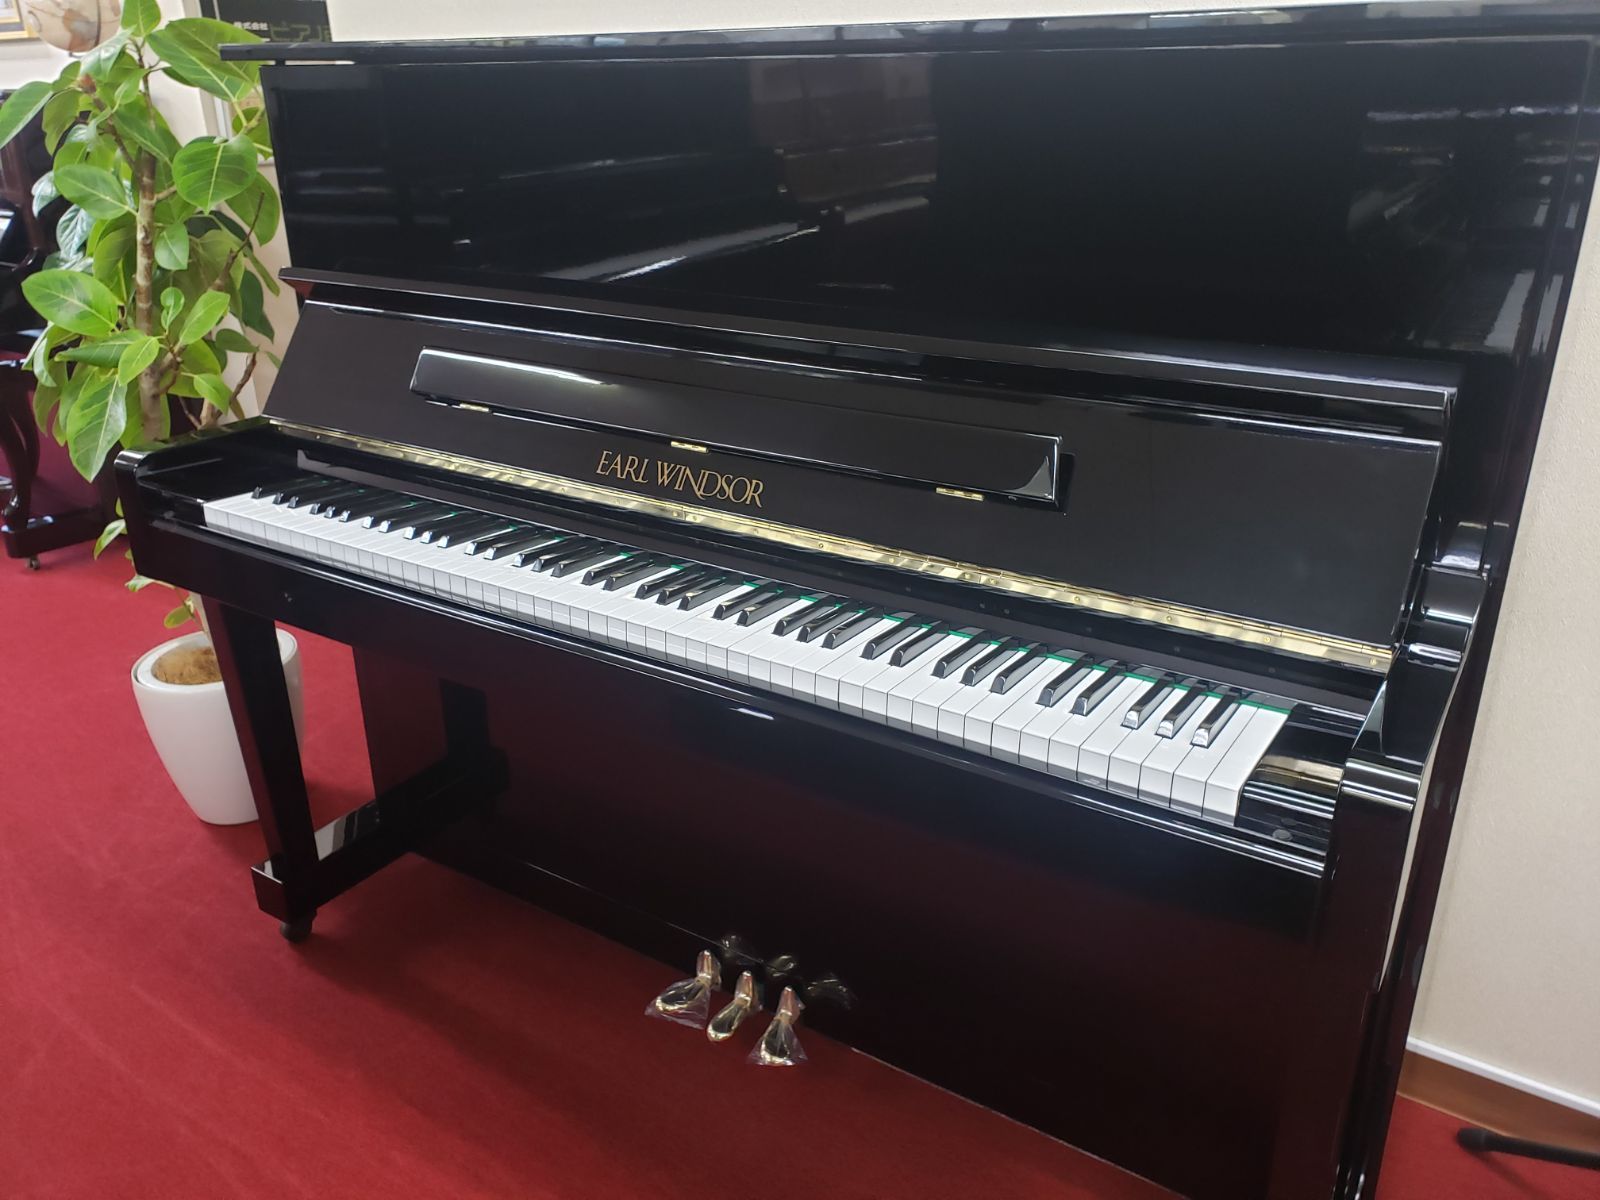 EARL WINDSOR W112 DELUXE 中古アップライトピアノ - メルカリ